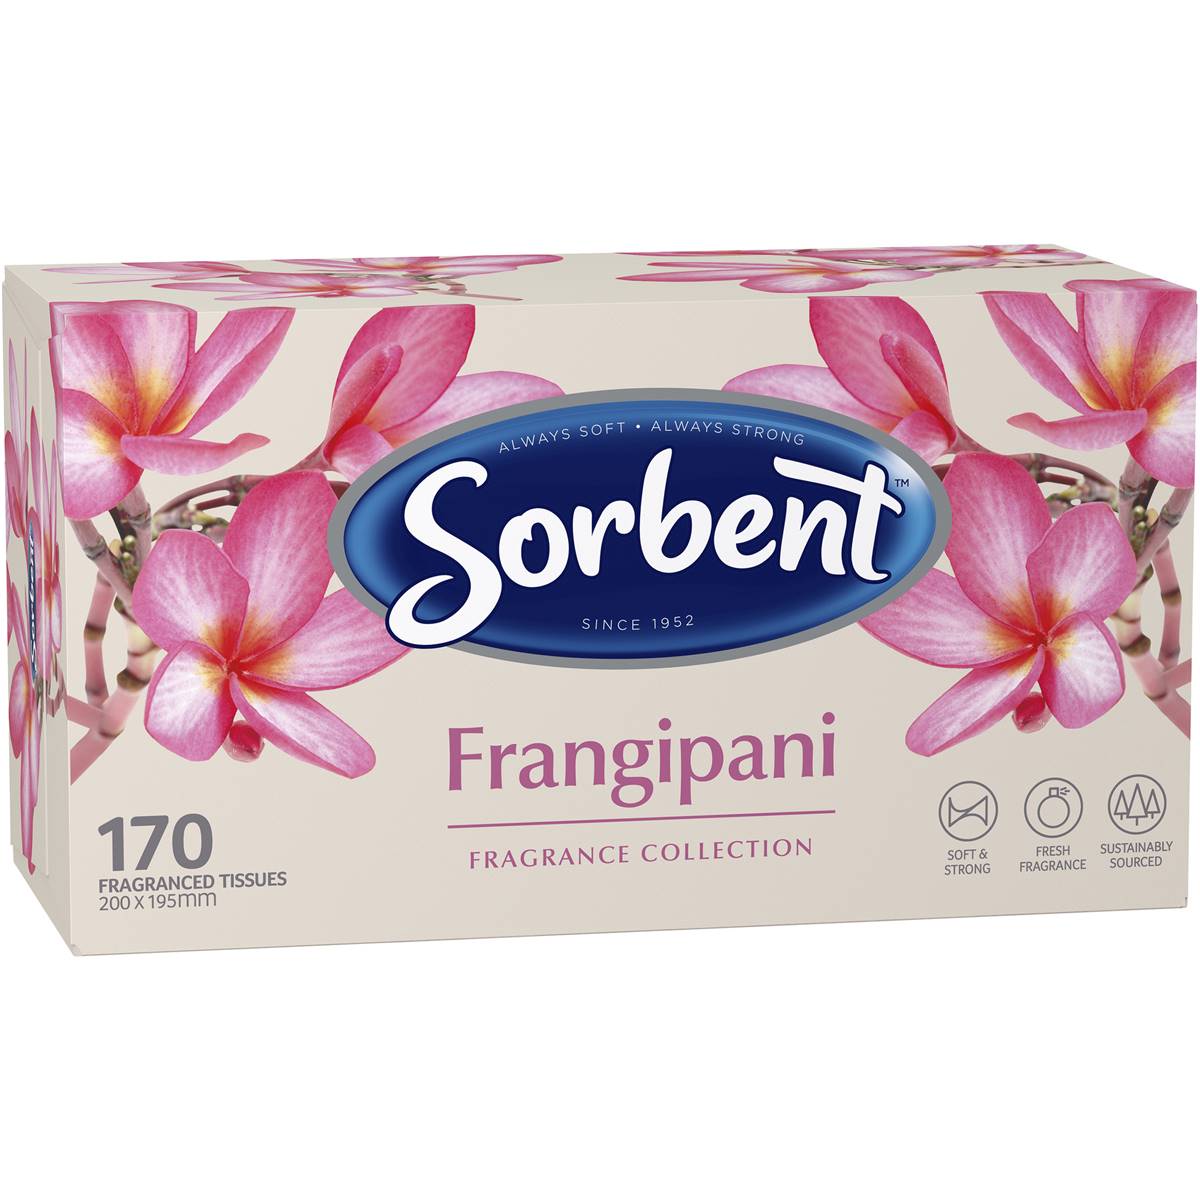 Sorbent Frangipani Fragrance Collection Facial Tissue 170 Pack